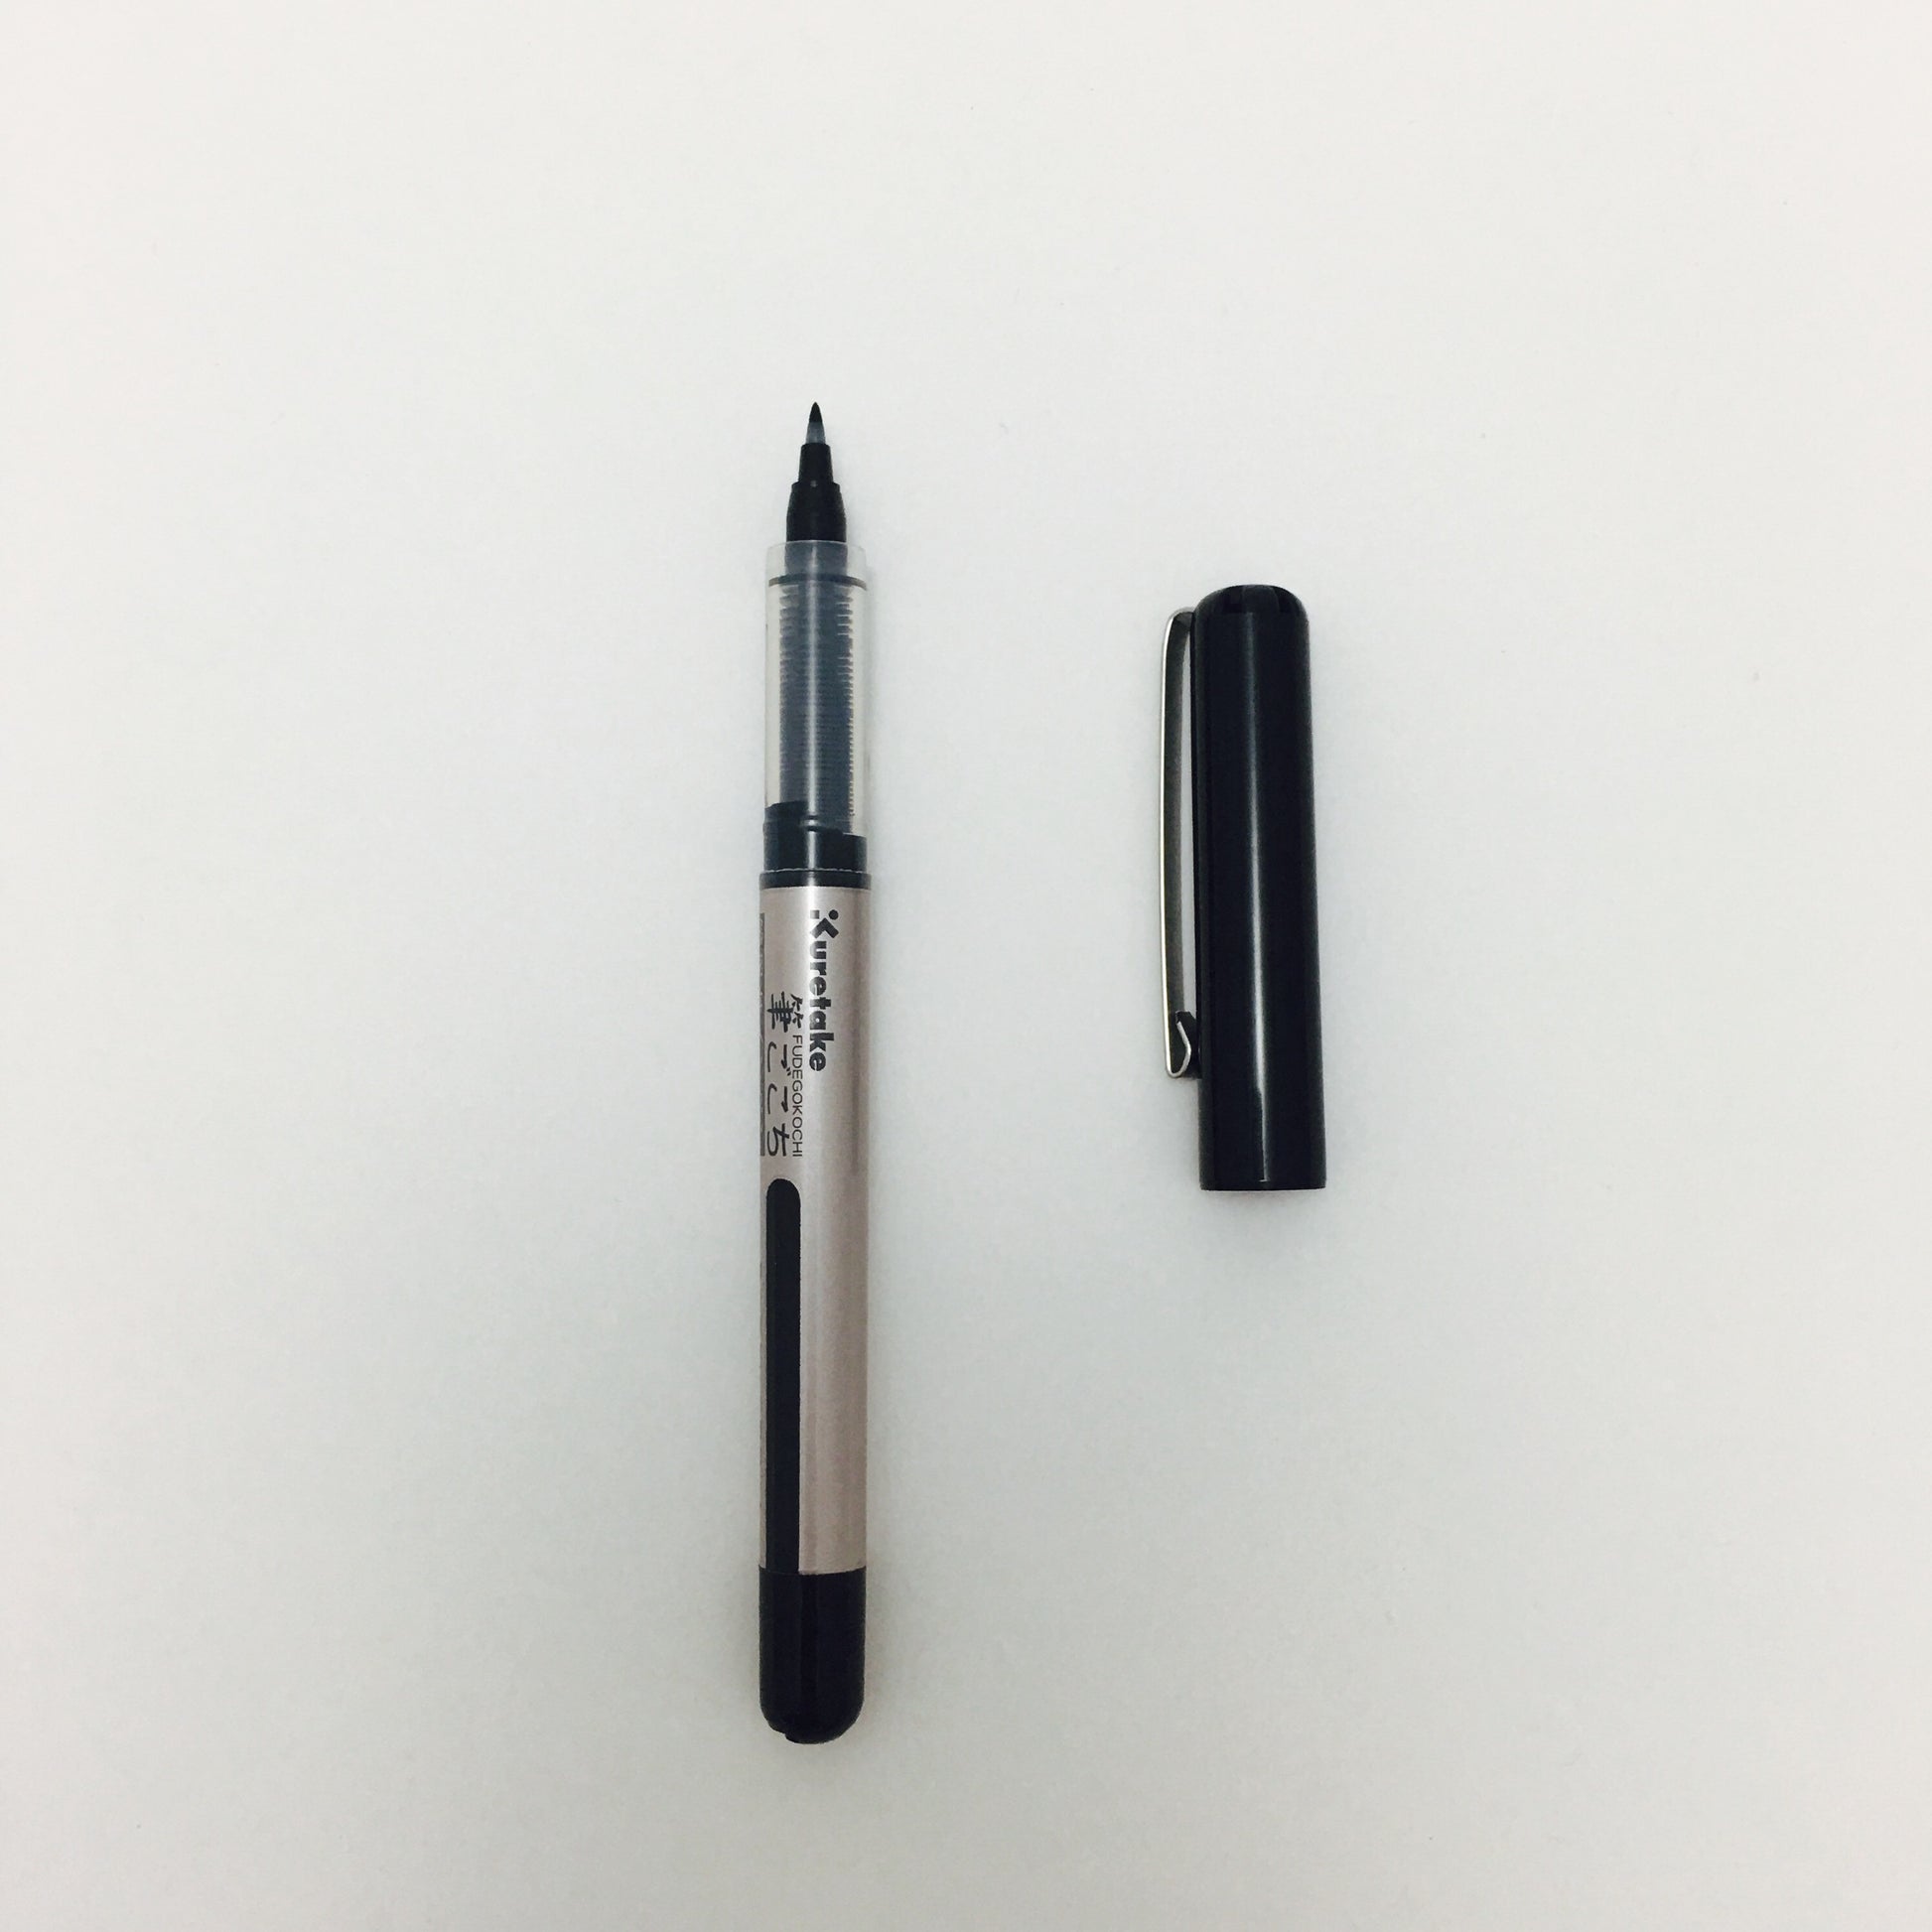 Kuretake Brush Pen LS1-10S - "Fudegocochi Brush Pen" - by Kuretake - K. A. Artist Shop